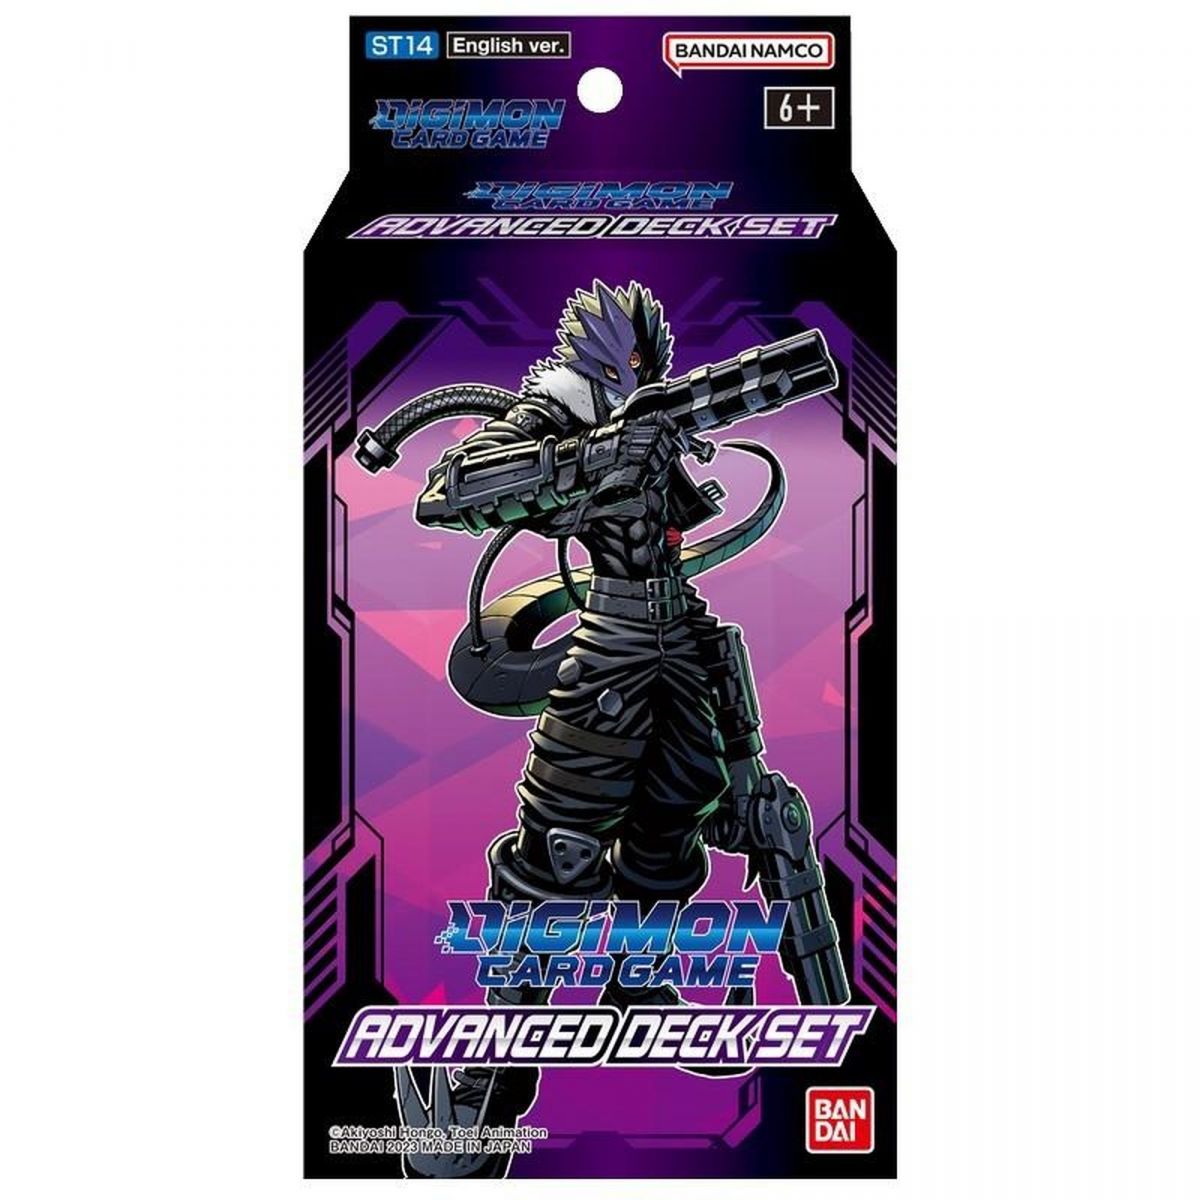 Digimon-Kartenspiel – Advanced Deck Set [ST14] – DE